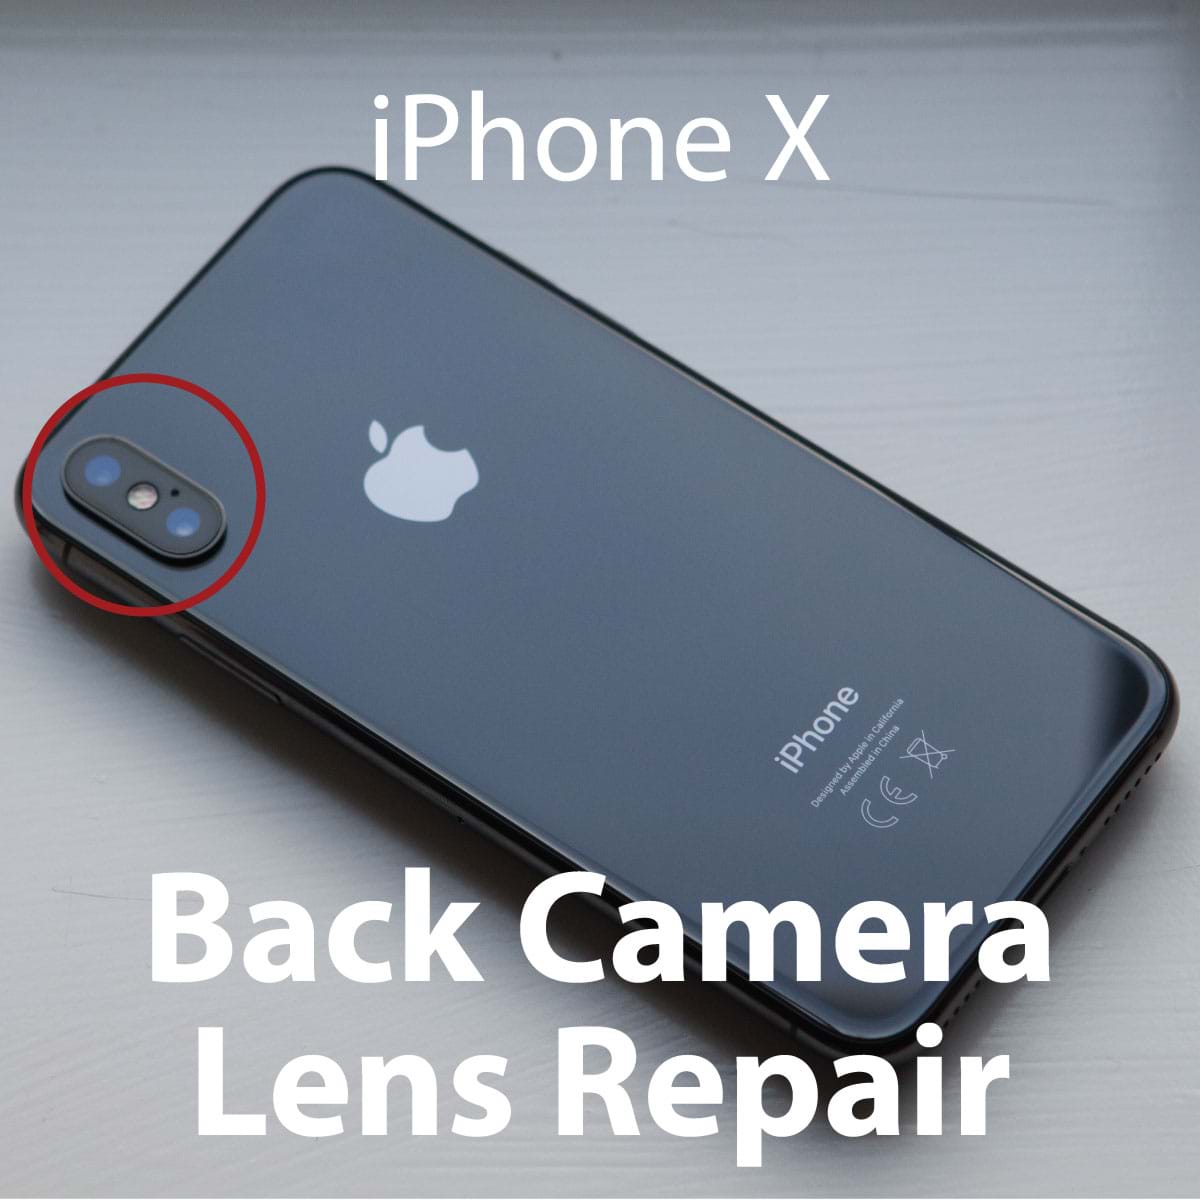 iPhone X Screen Repair Near Me » iPhone Repair NYC